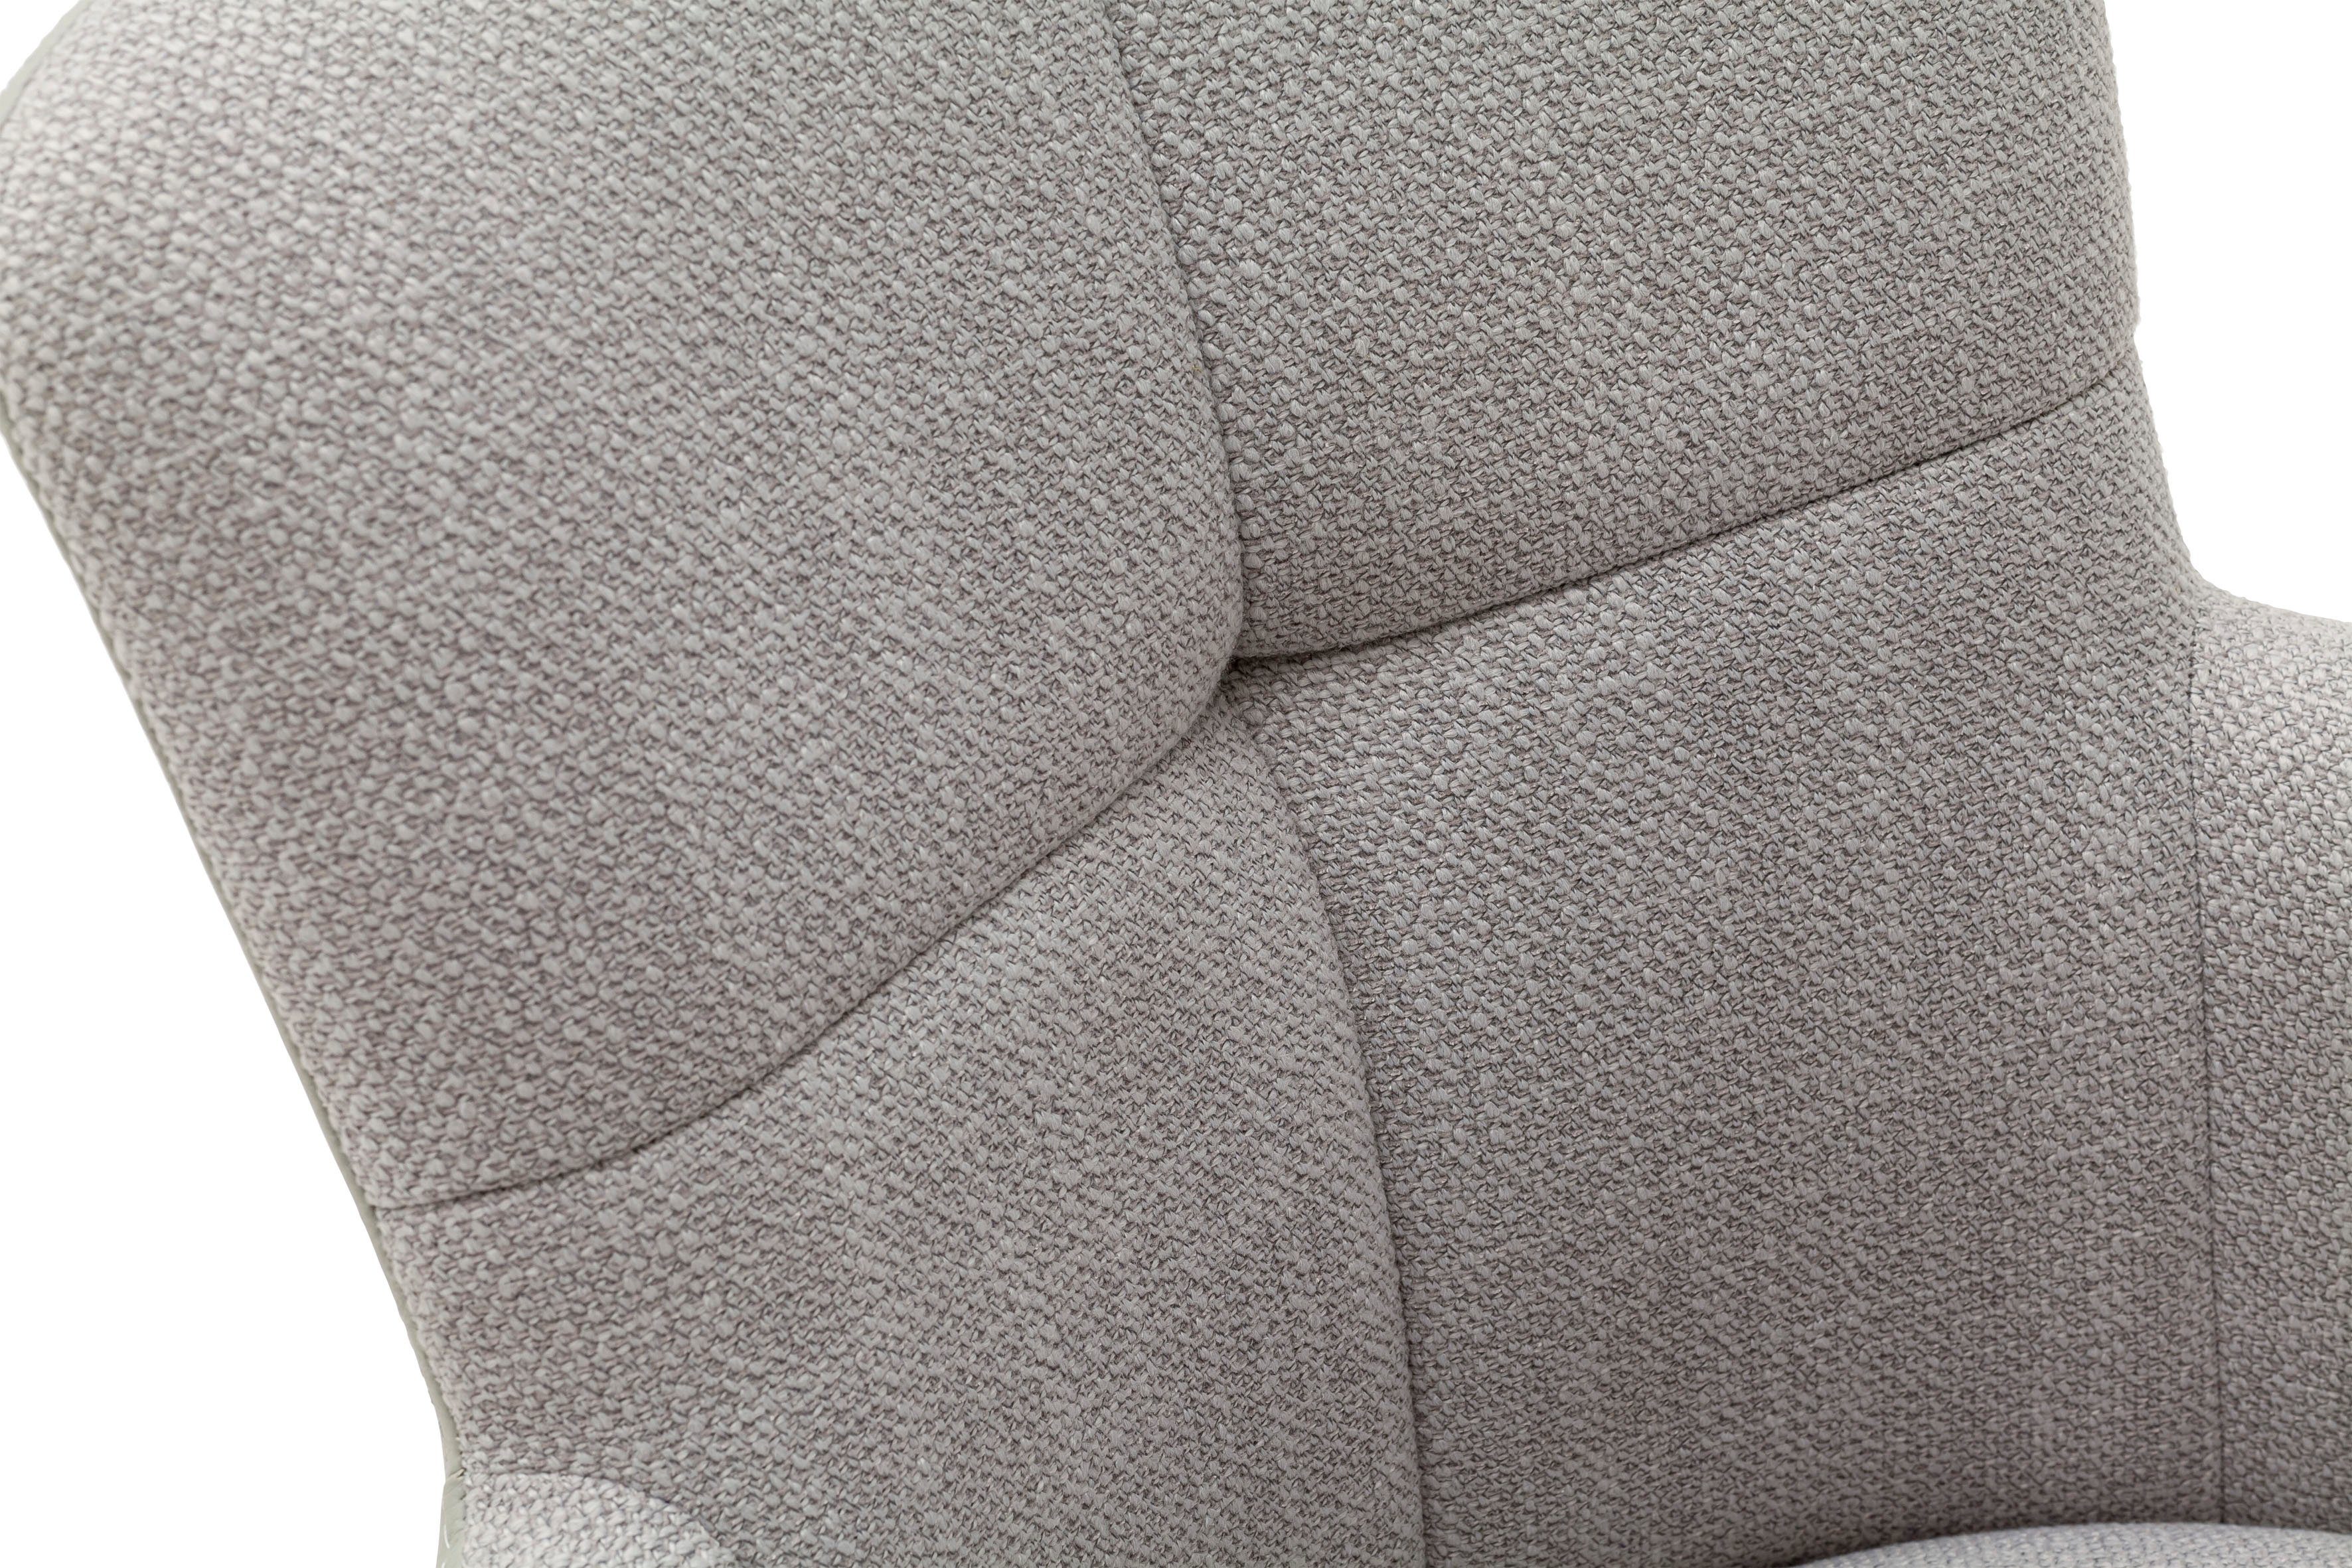 Esszimmerstuhl drehbar mit Stuhl | 2 Grau gebürstet Mecana | kg St), Materialmix, 120 2er MCA (Set, 360° Nivellierung, Set Grau furniture Edelstahl bis